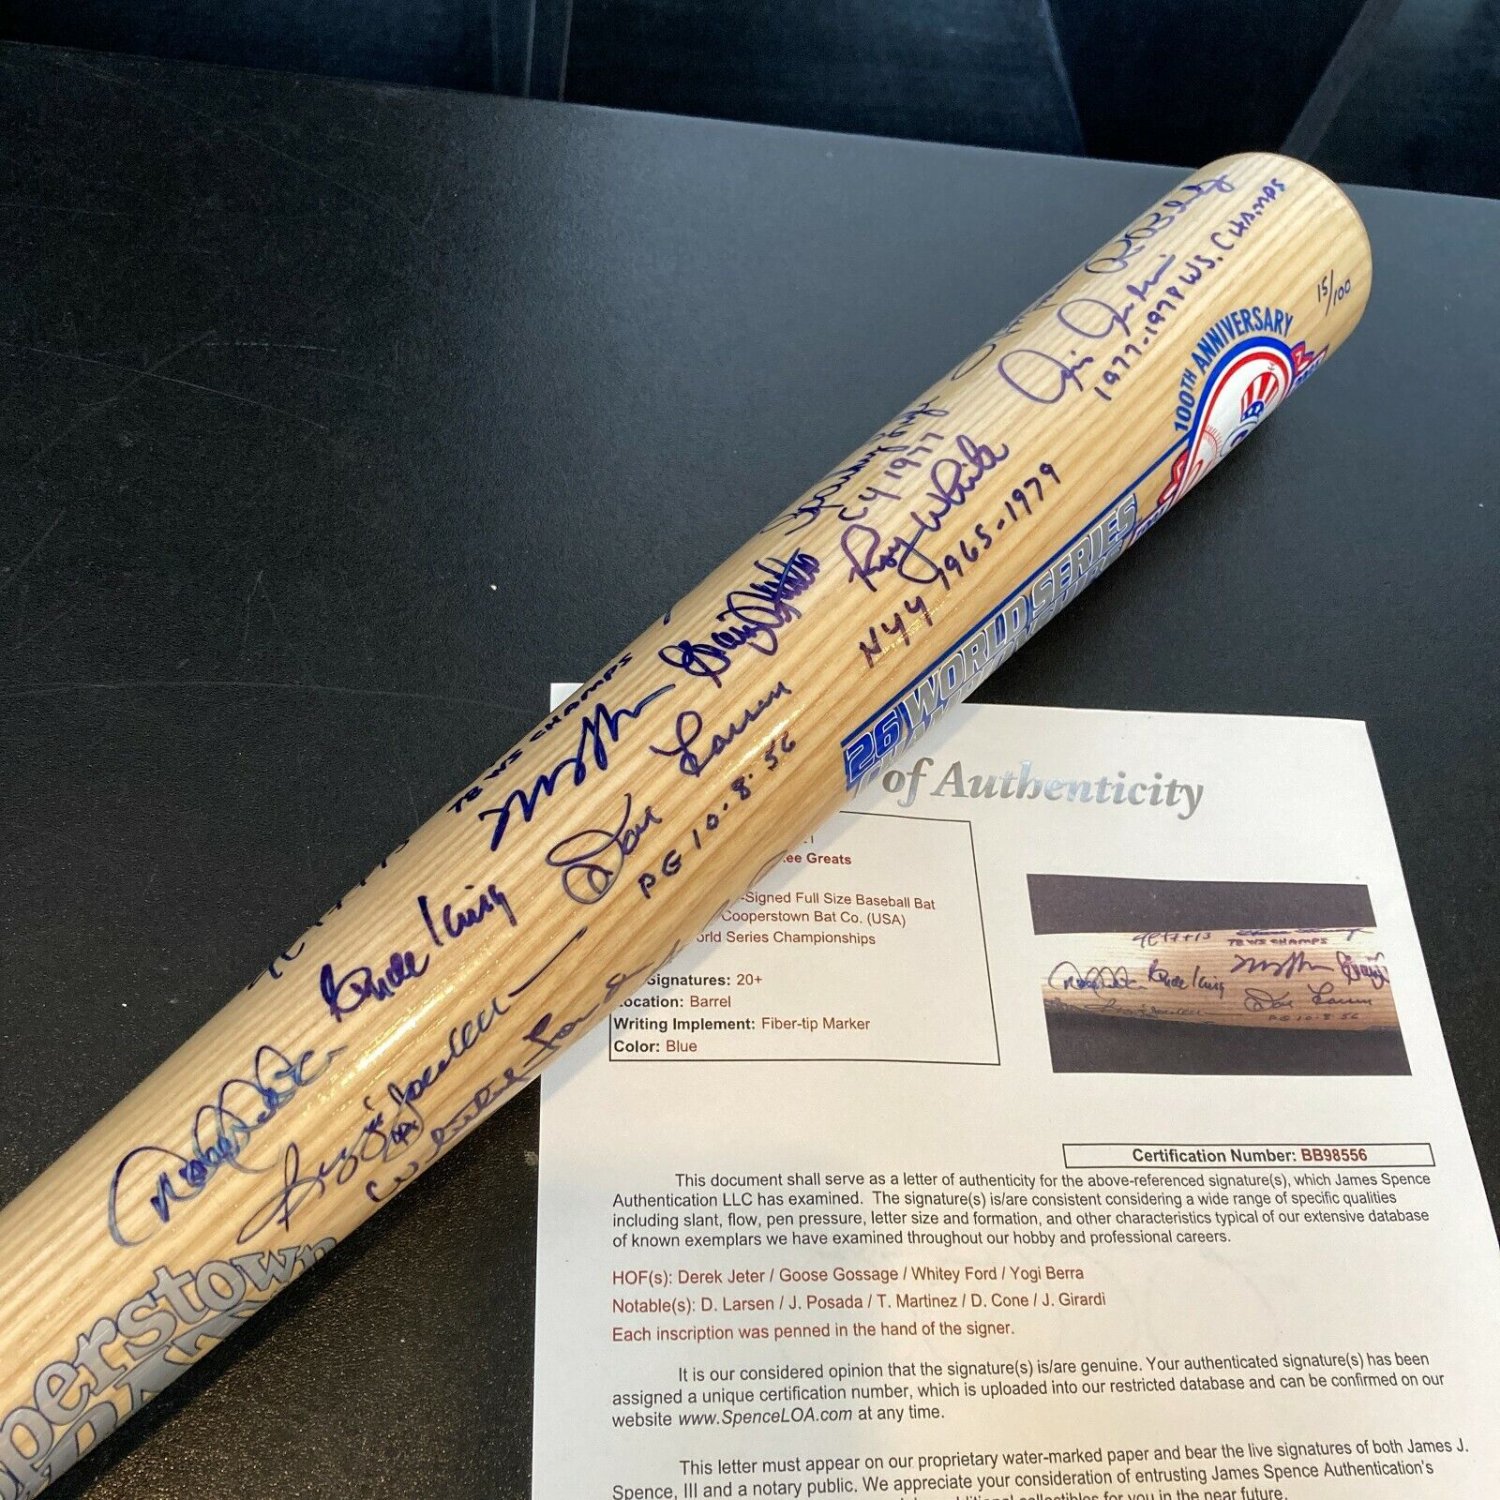 Derek Jeter autographed Baseball Bat